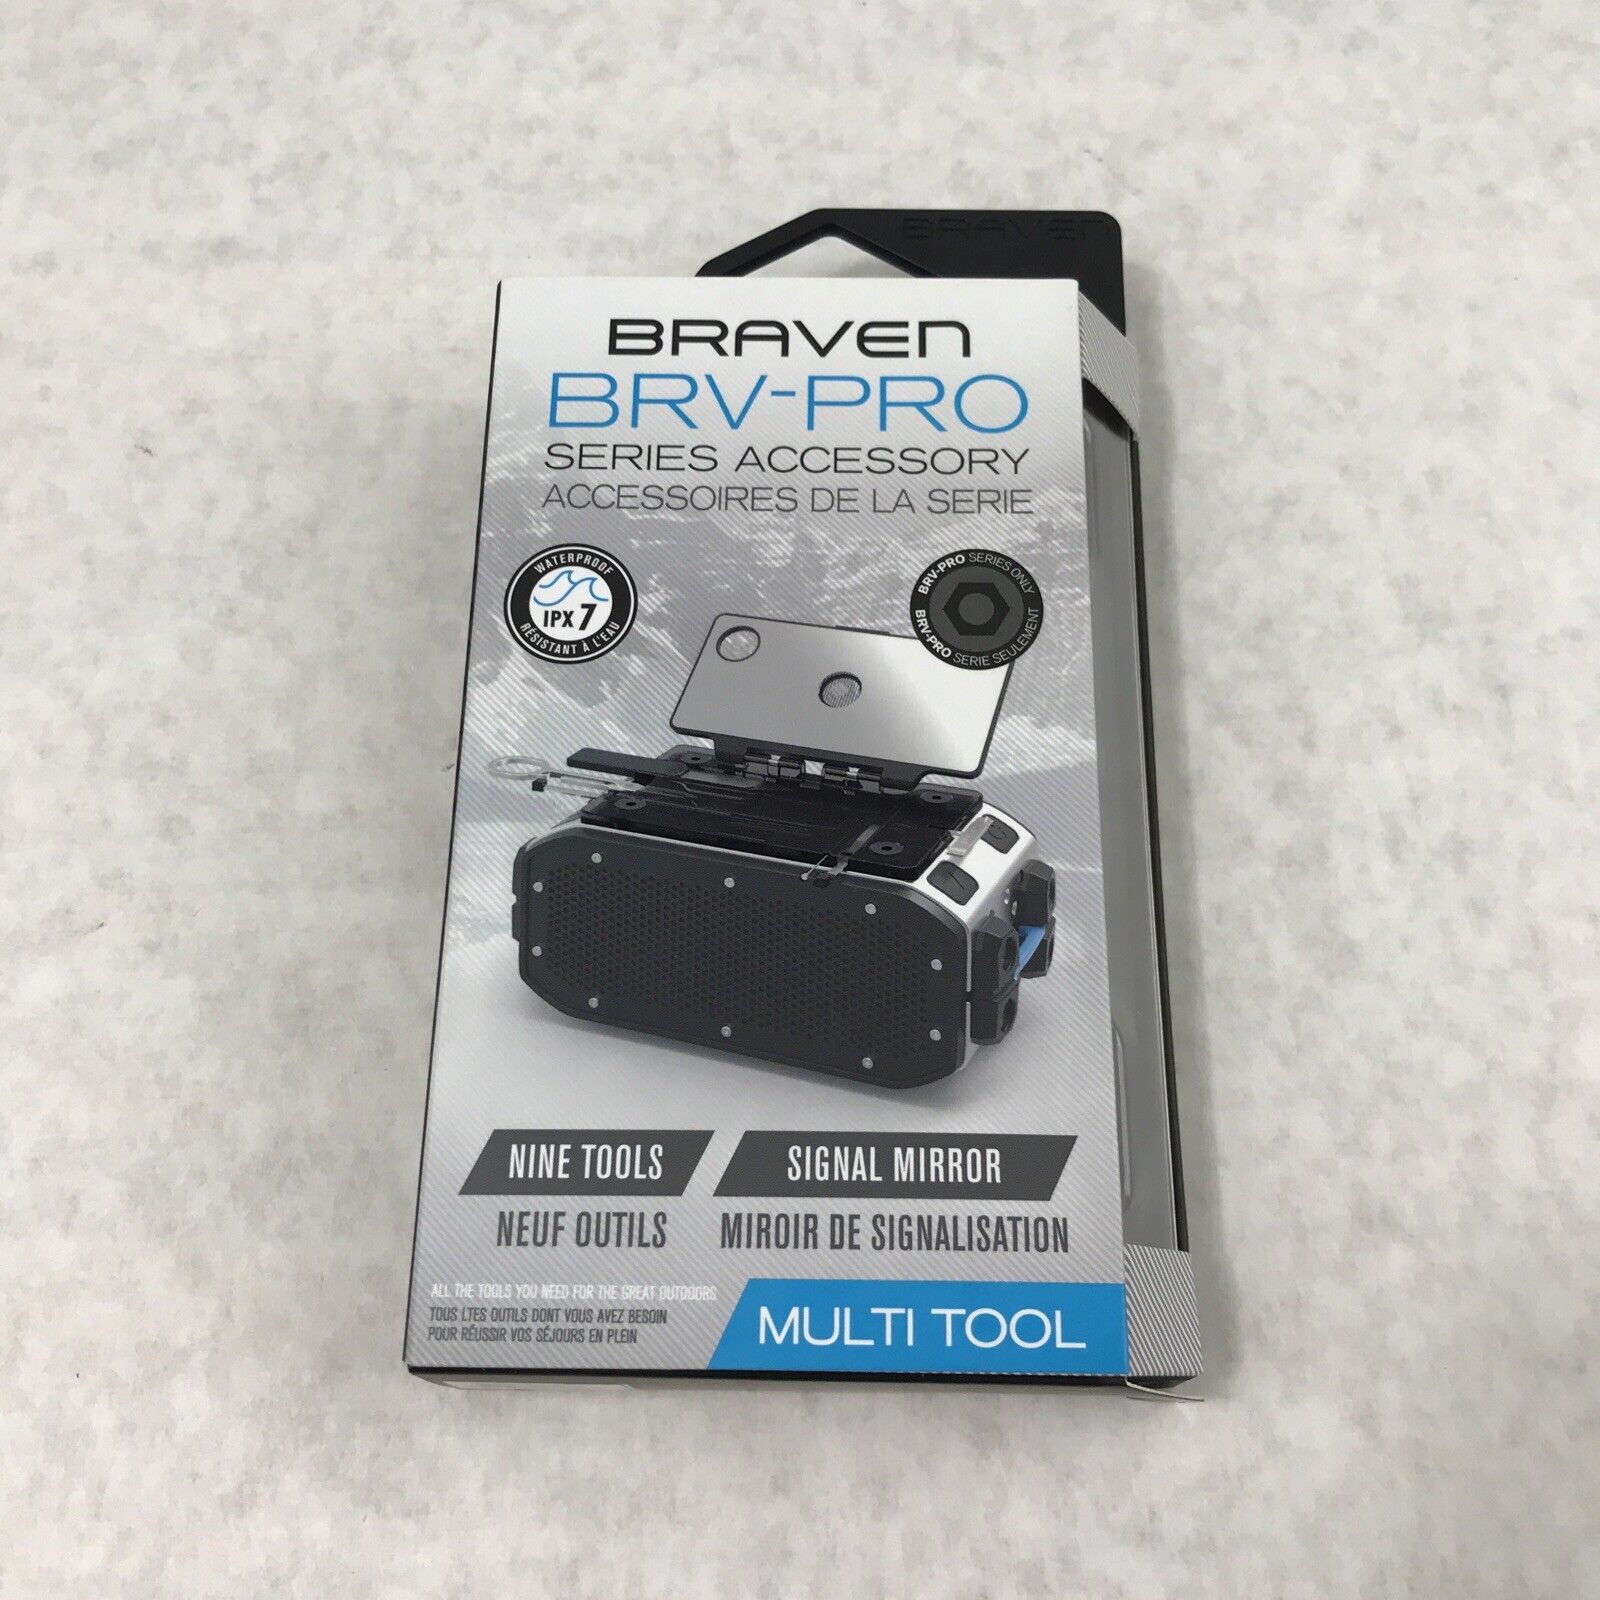 Lot of 4 Braven BRV-PRO Series Accessory Nine Tool Signal Mirror Multi Tool